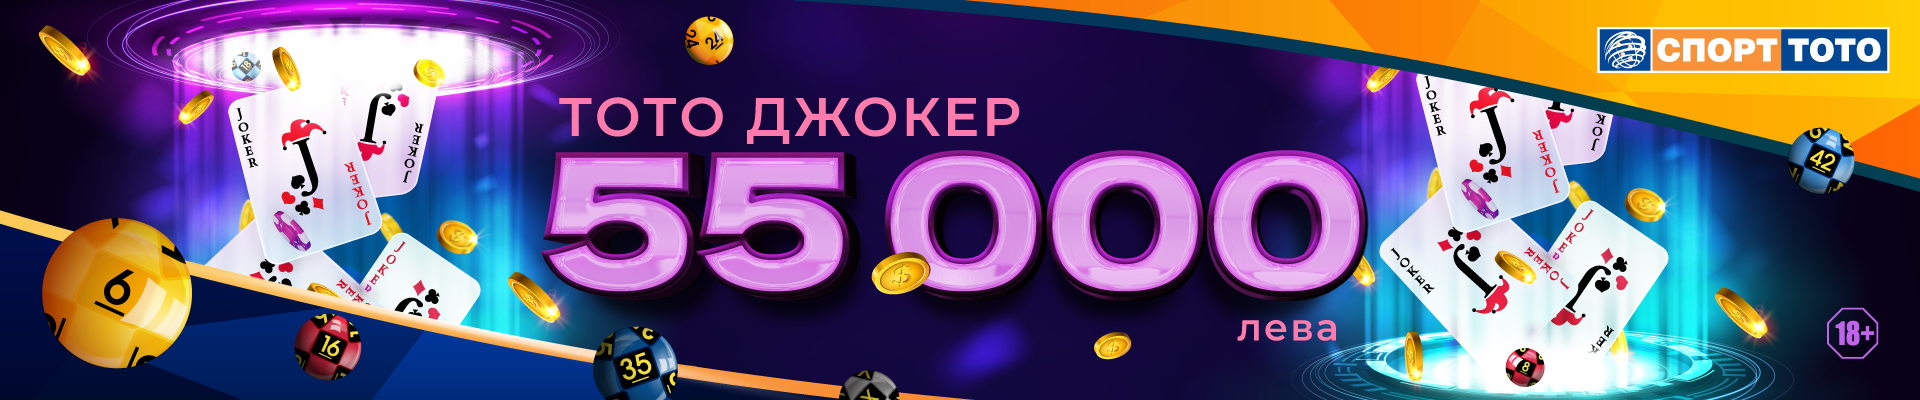 Тото Джокер 55 000